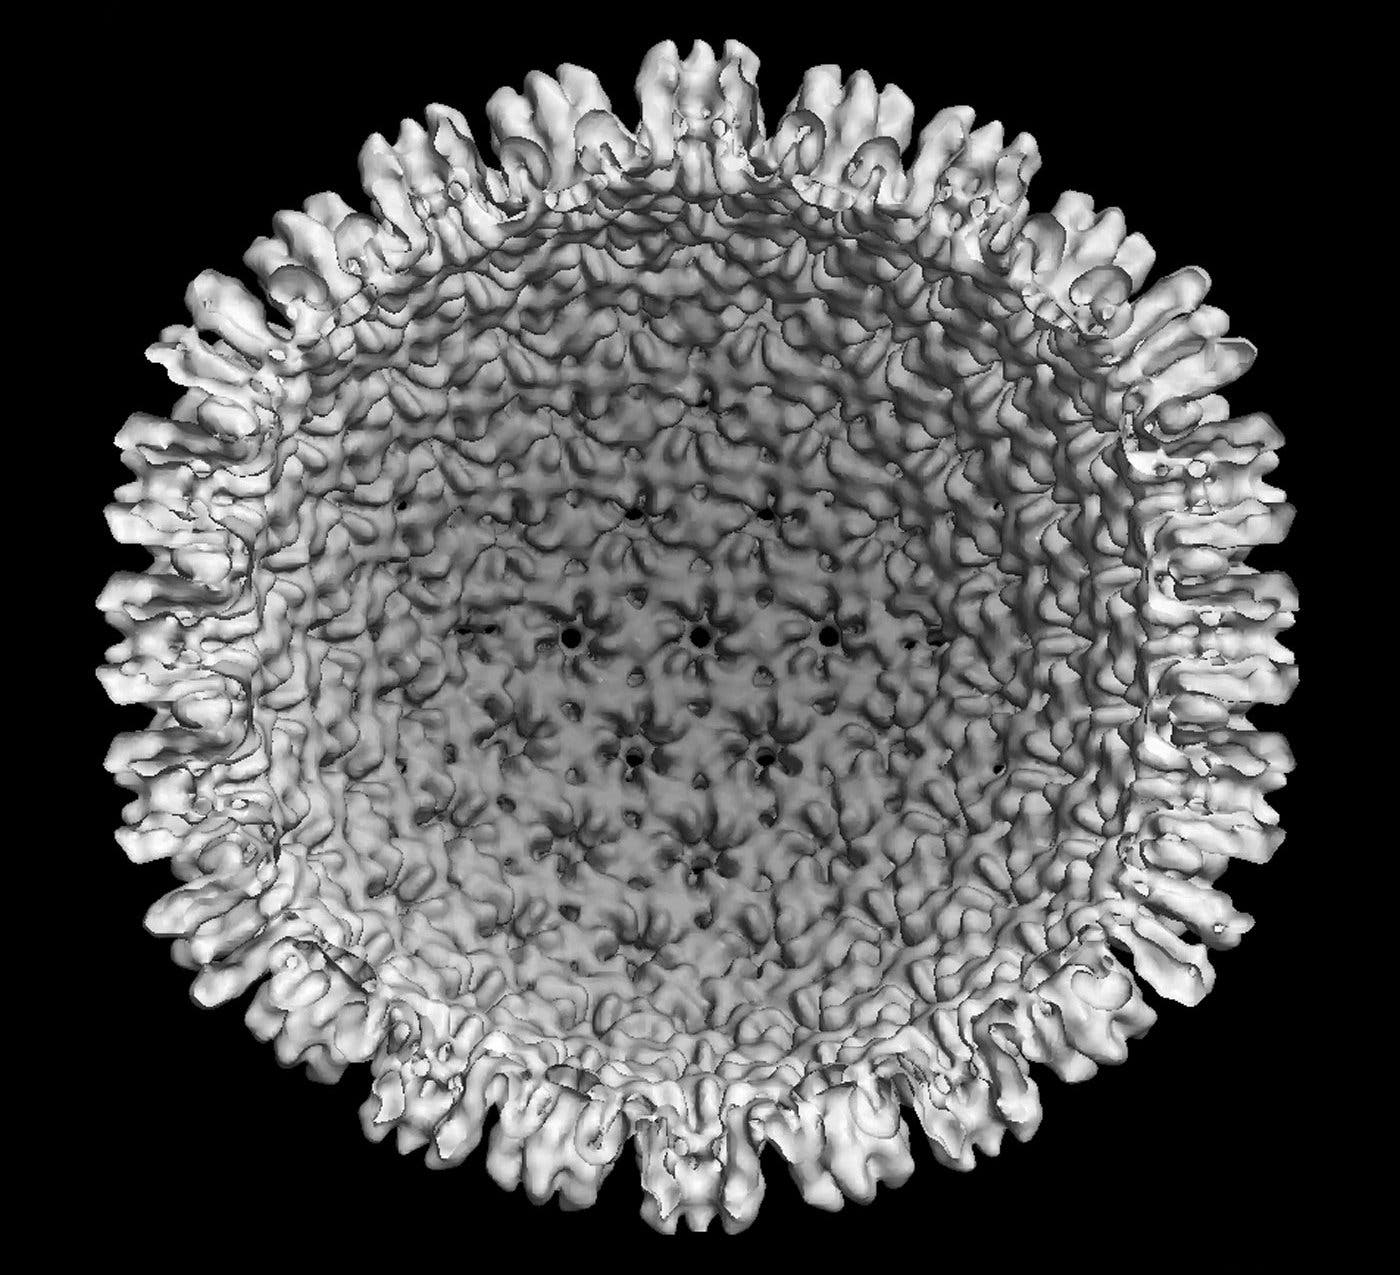 Kaposi-Sarkom assoziiertes Herpesvirus (KSHV)